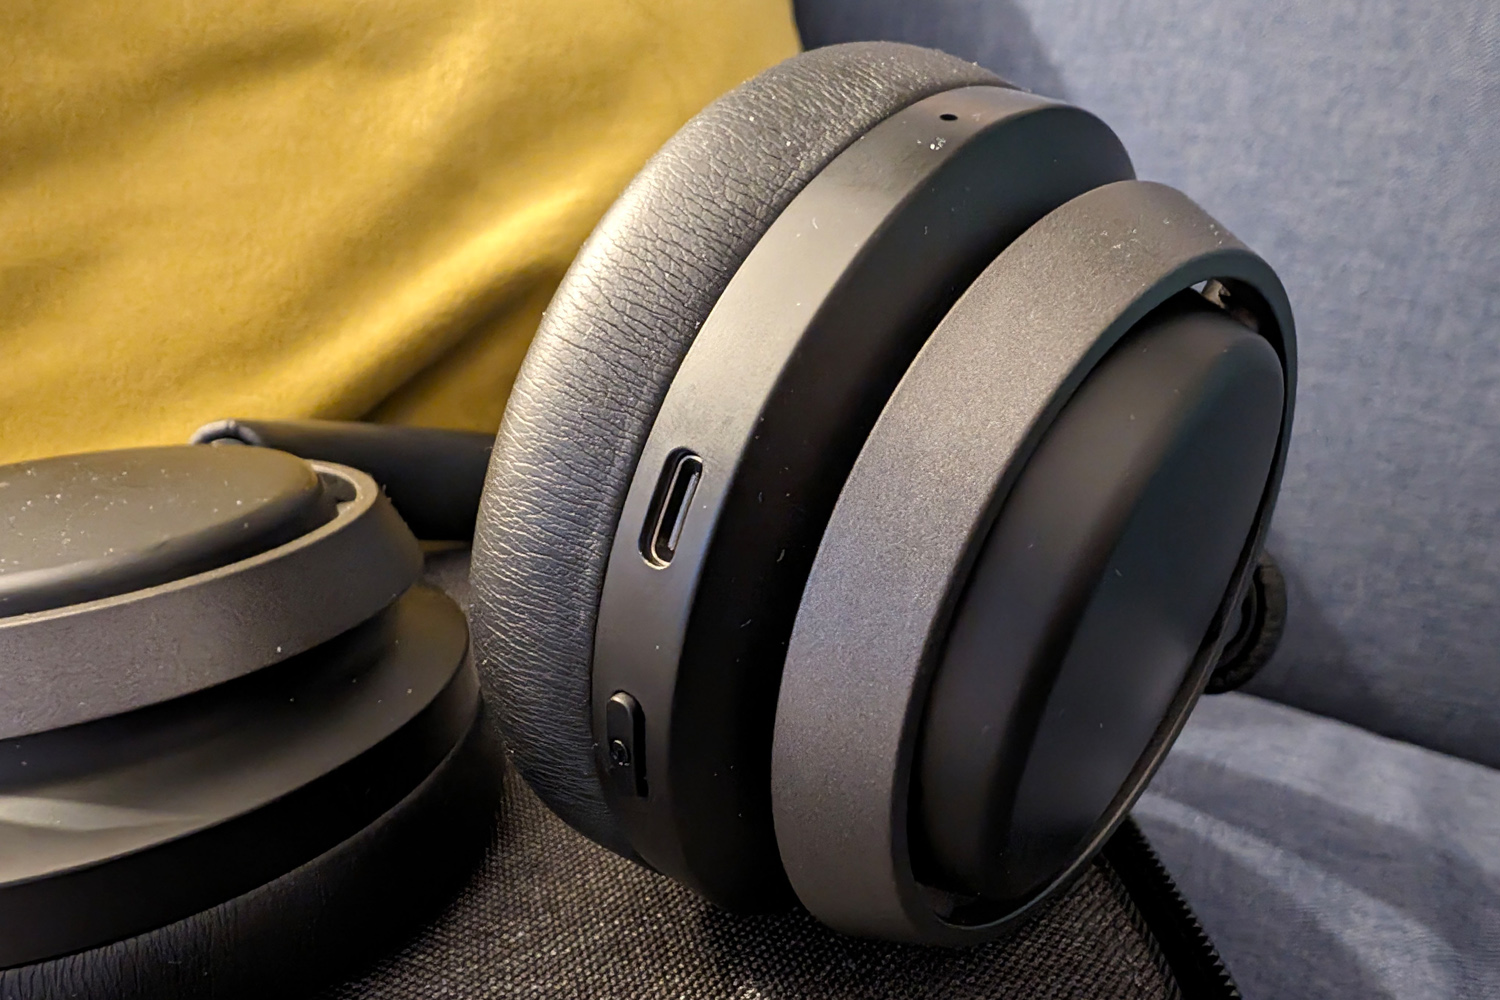 Philips Fidelio M1BT review: great-sounding Bluetooth headphones, Gadgets